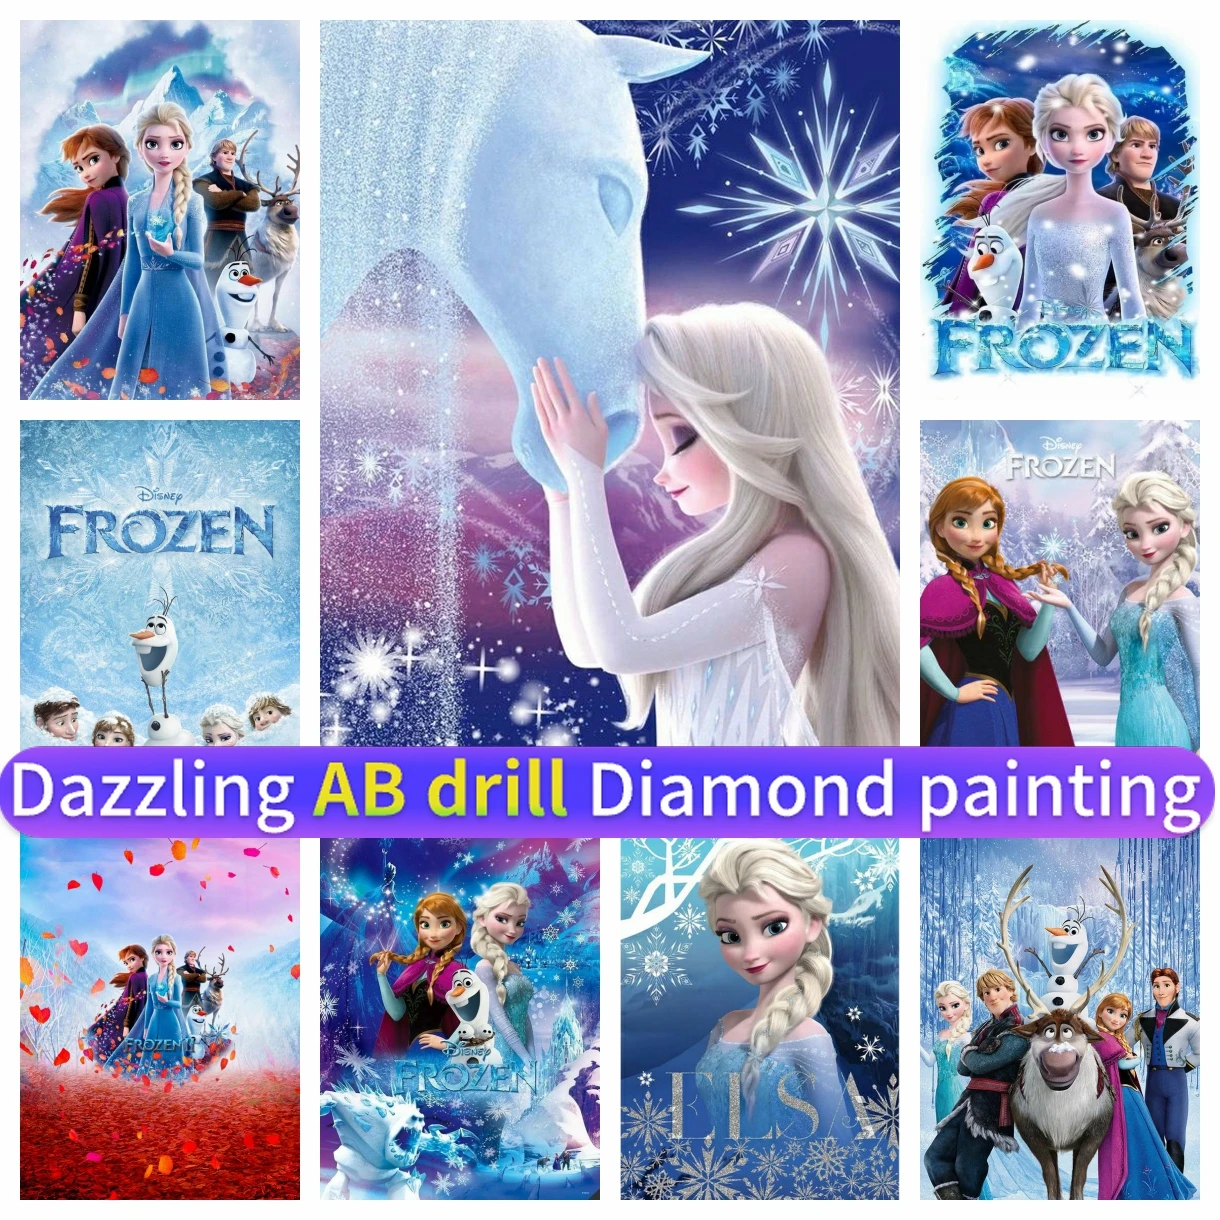 

Frozen Disney Elsa AB Diamond Painting Cartoon Movie 5D DIY Cross Stitch Kit Mosaic Embroidery Children's Gift Home Decor